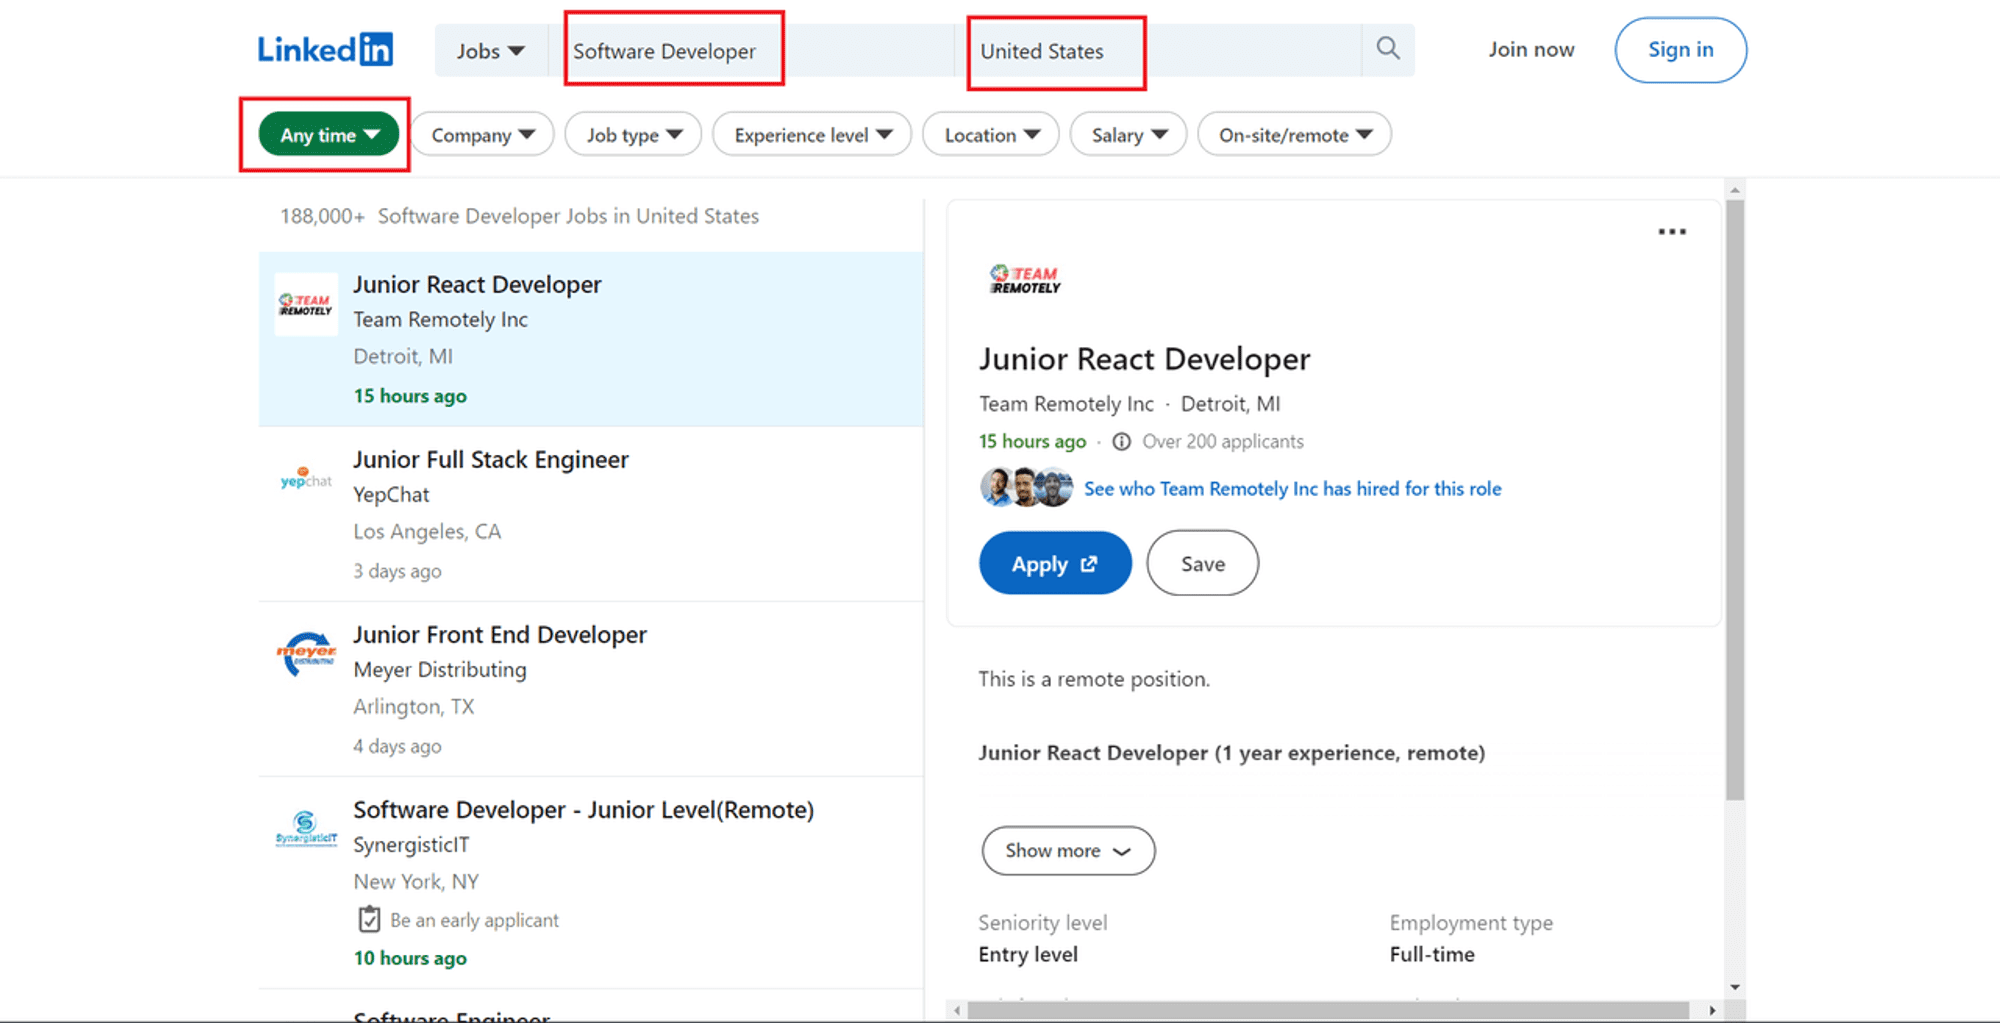 LinkedIn Software Developer jobs in the US